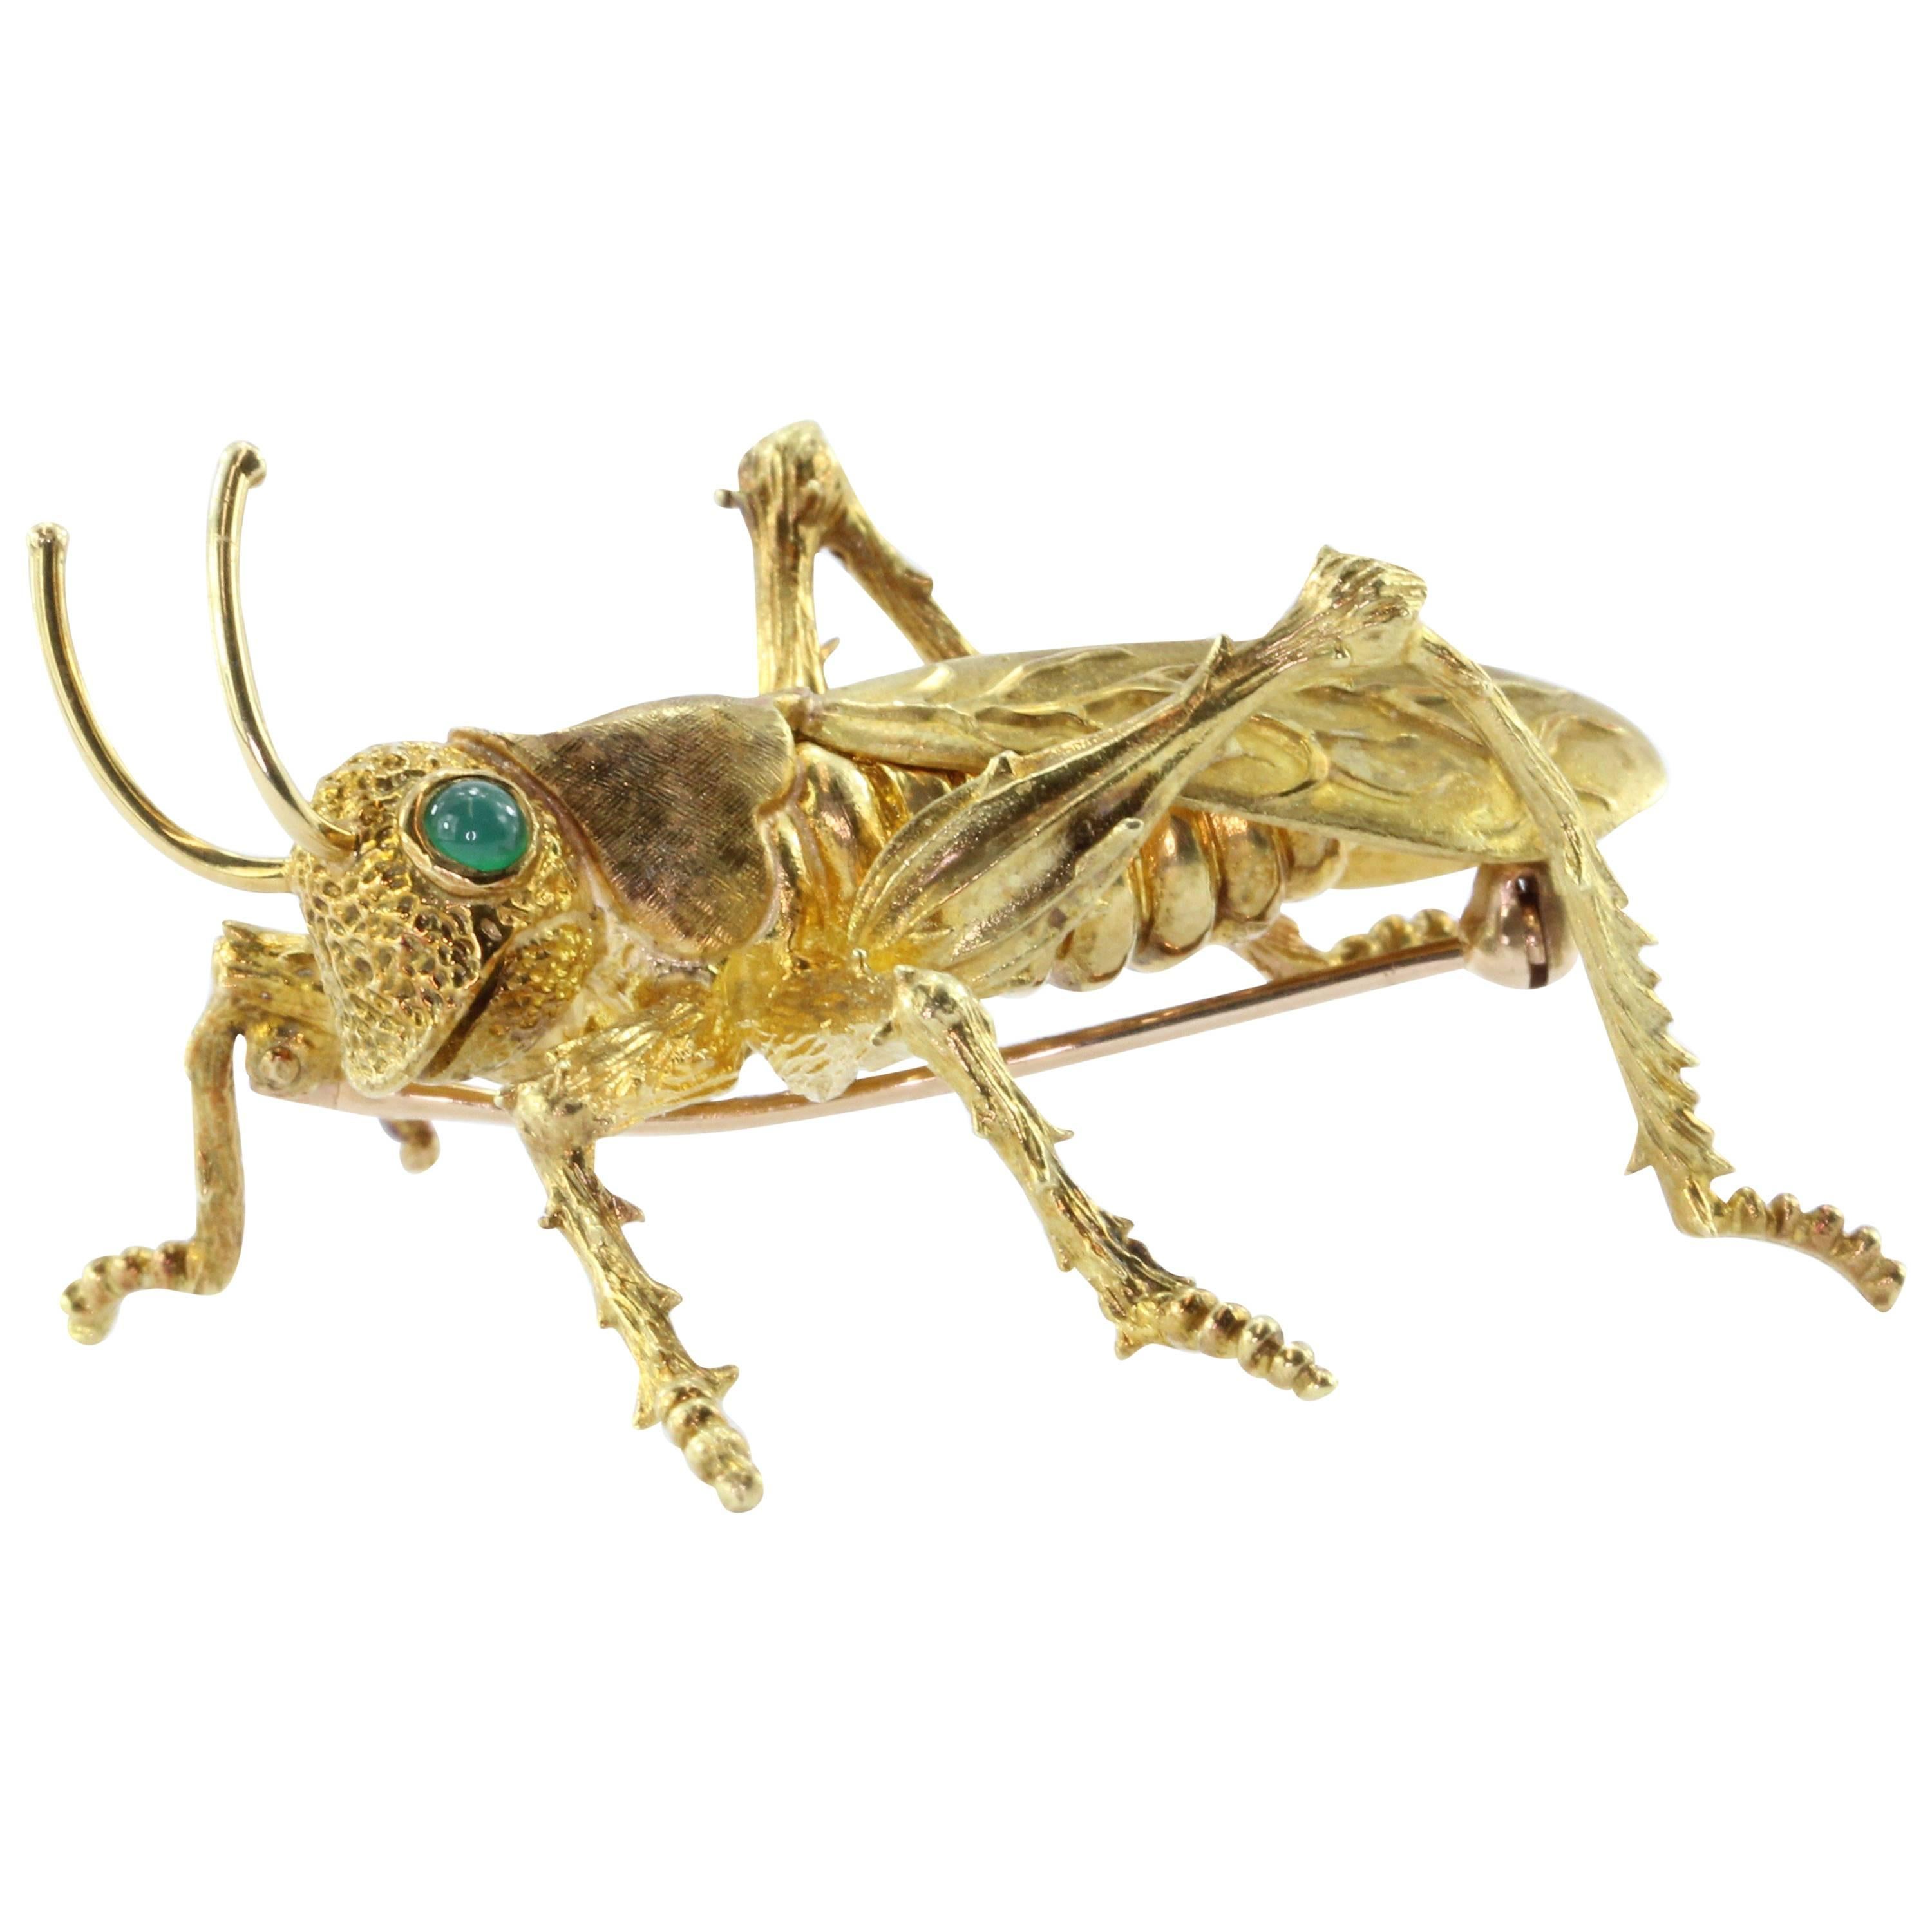  Kurt Wayne Emerald Gold Naturalistic Grasshopper Brooch Pin